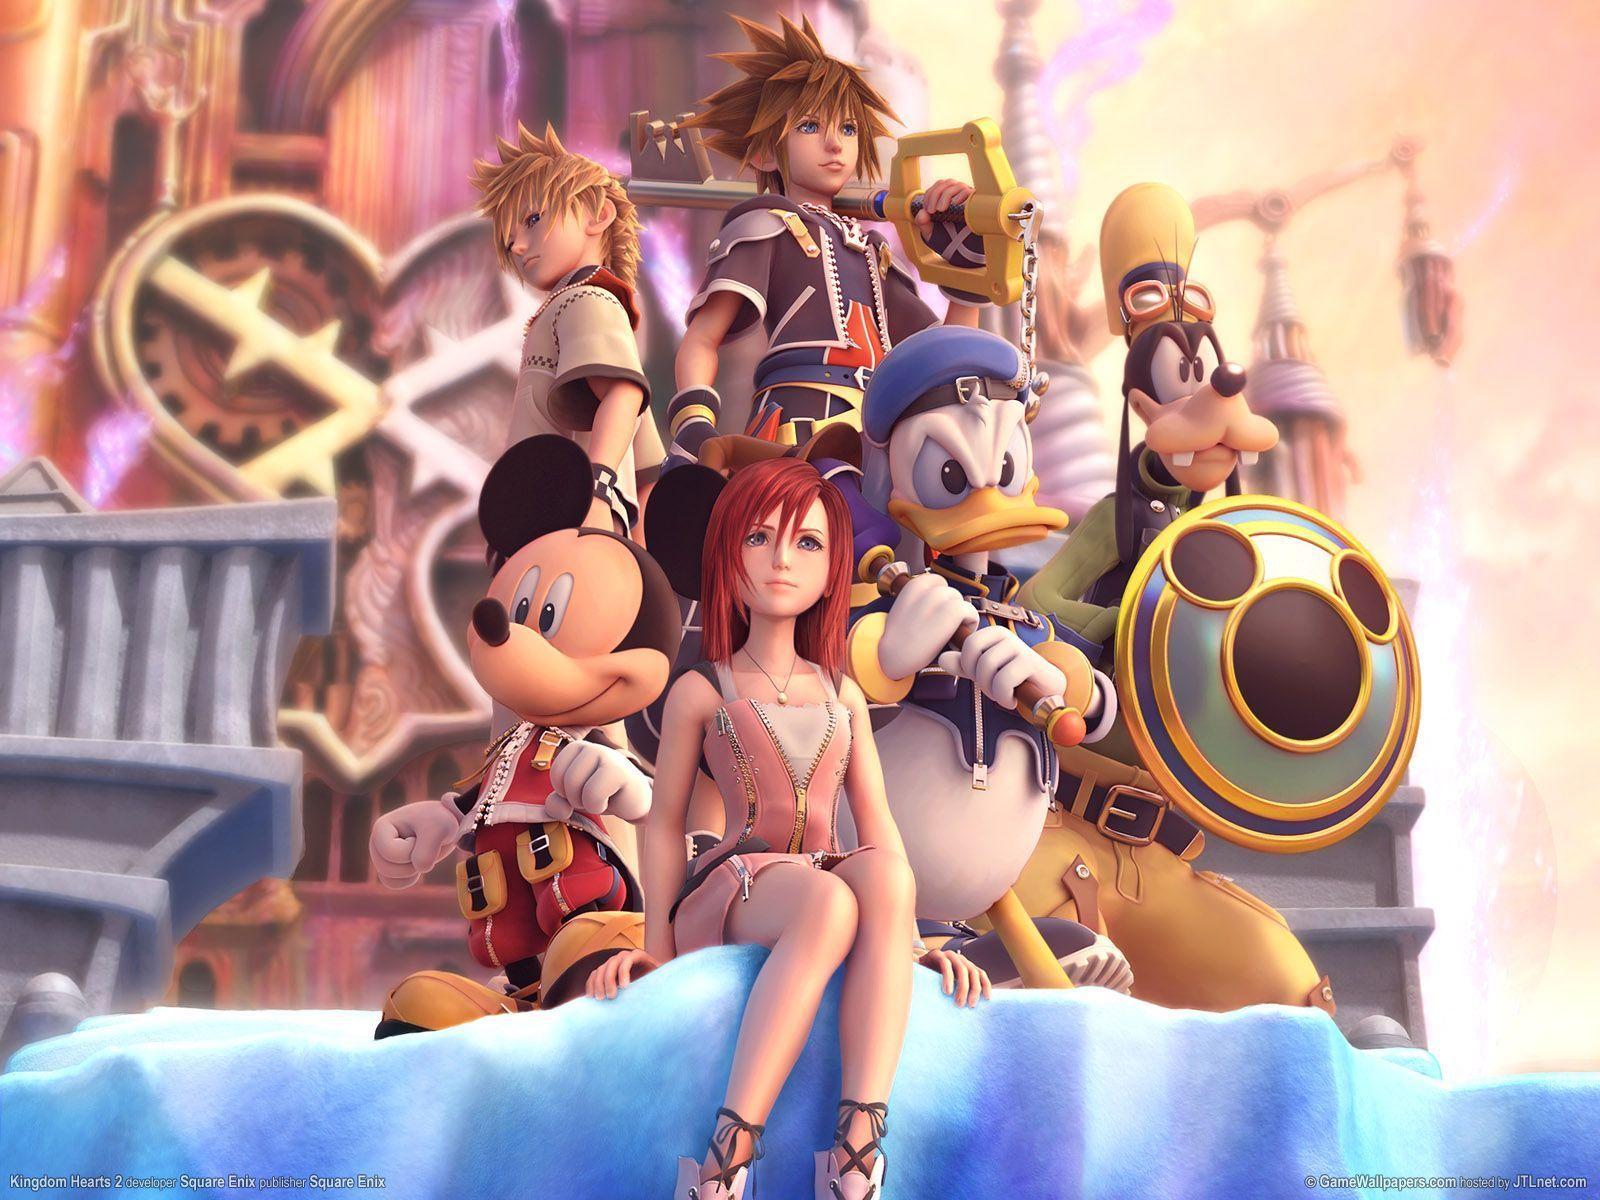 Wallpaper For > Kingdom Hearts Wallpaper HD Widescreen